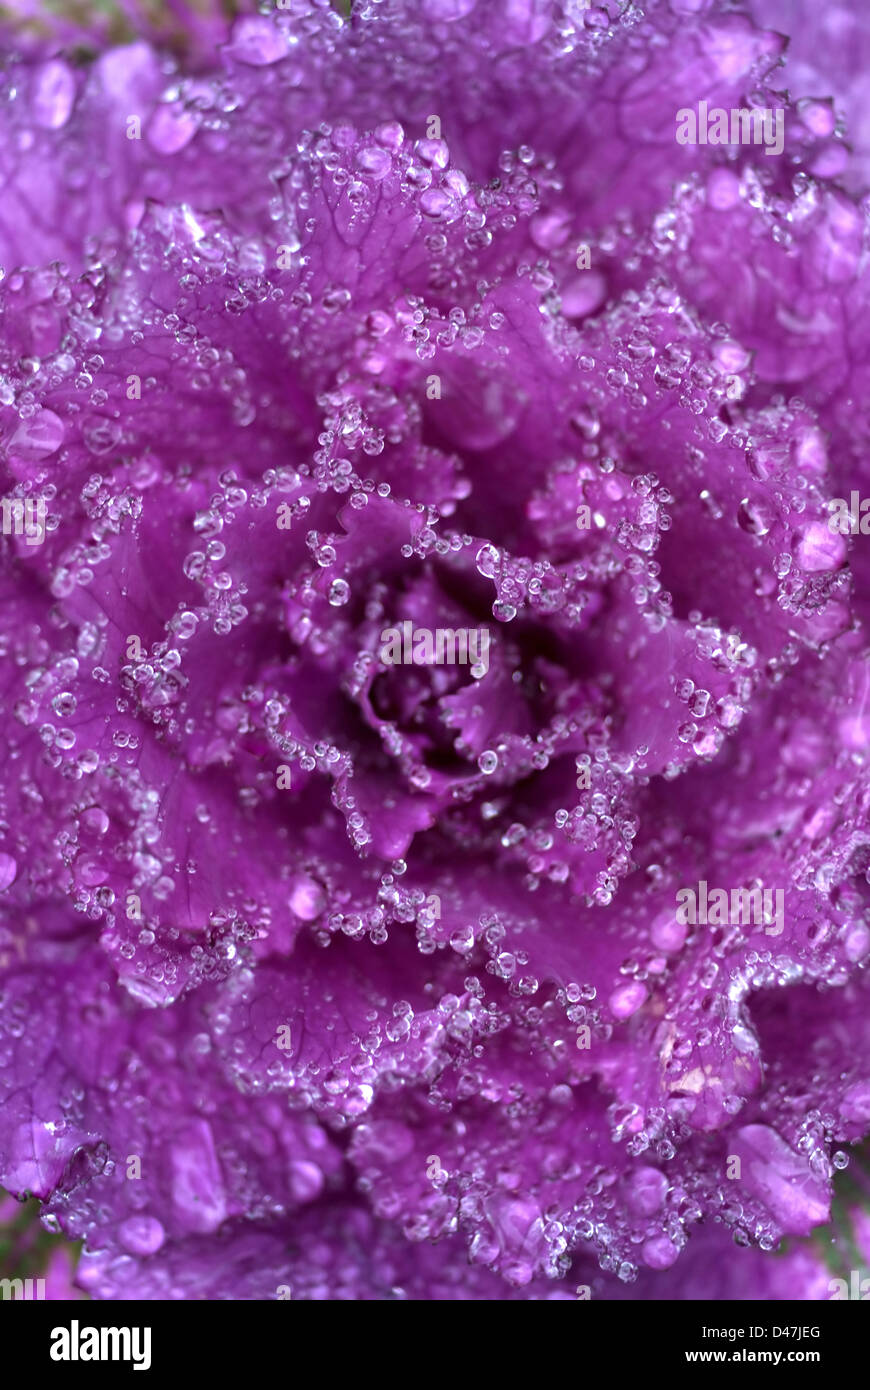 Dew drops on ornamental purple cabbage Stock Photo